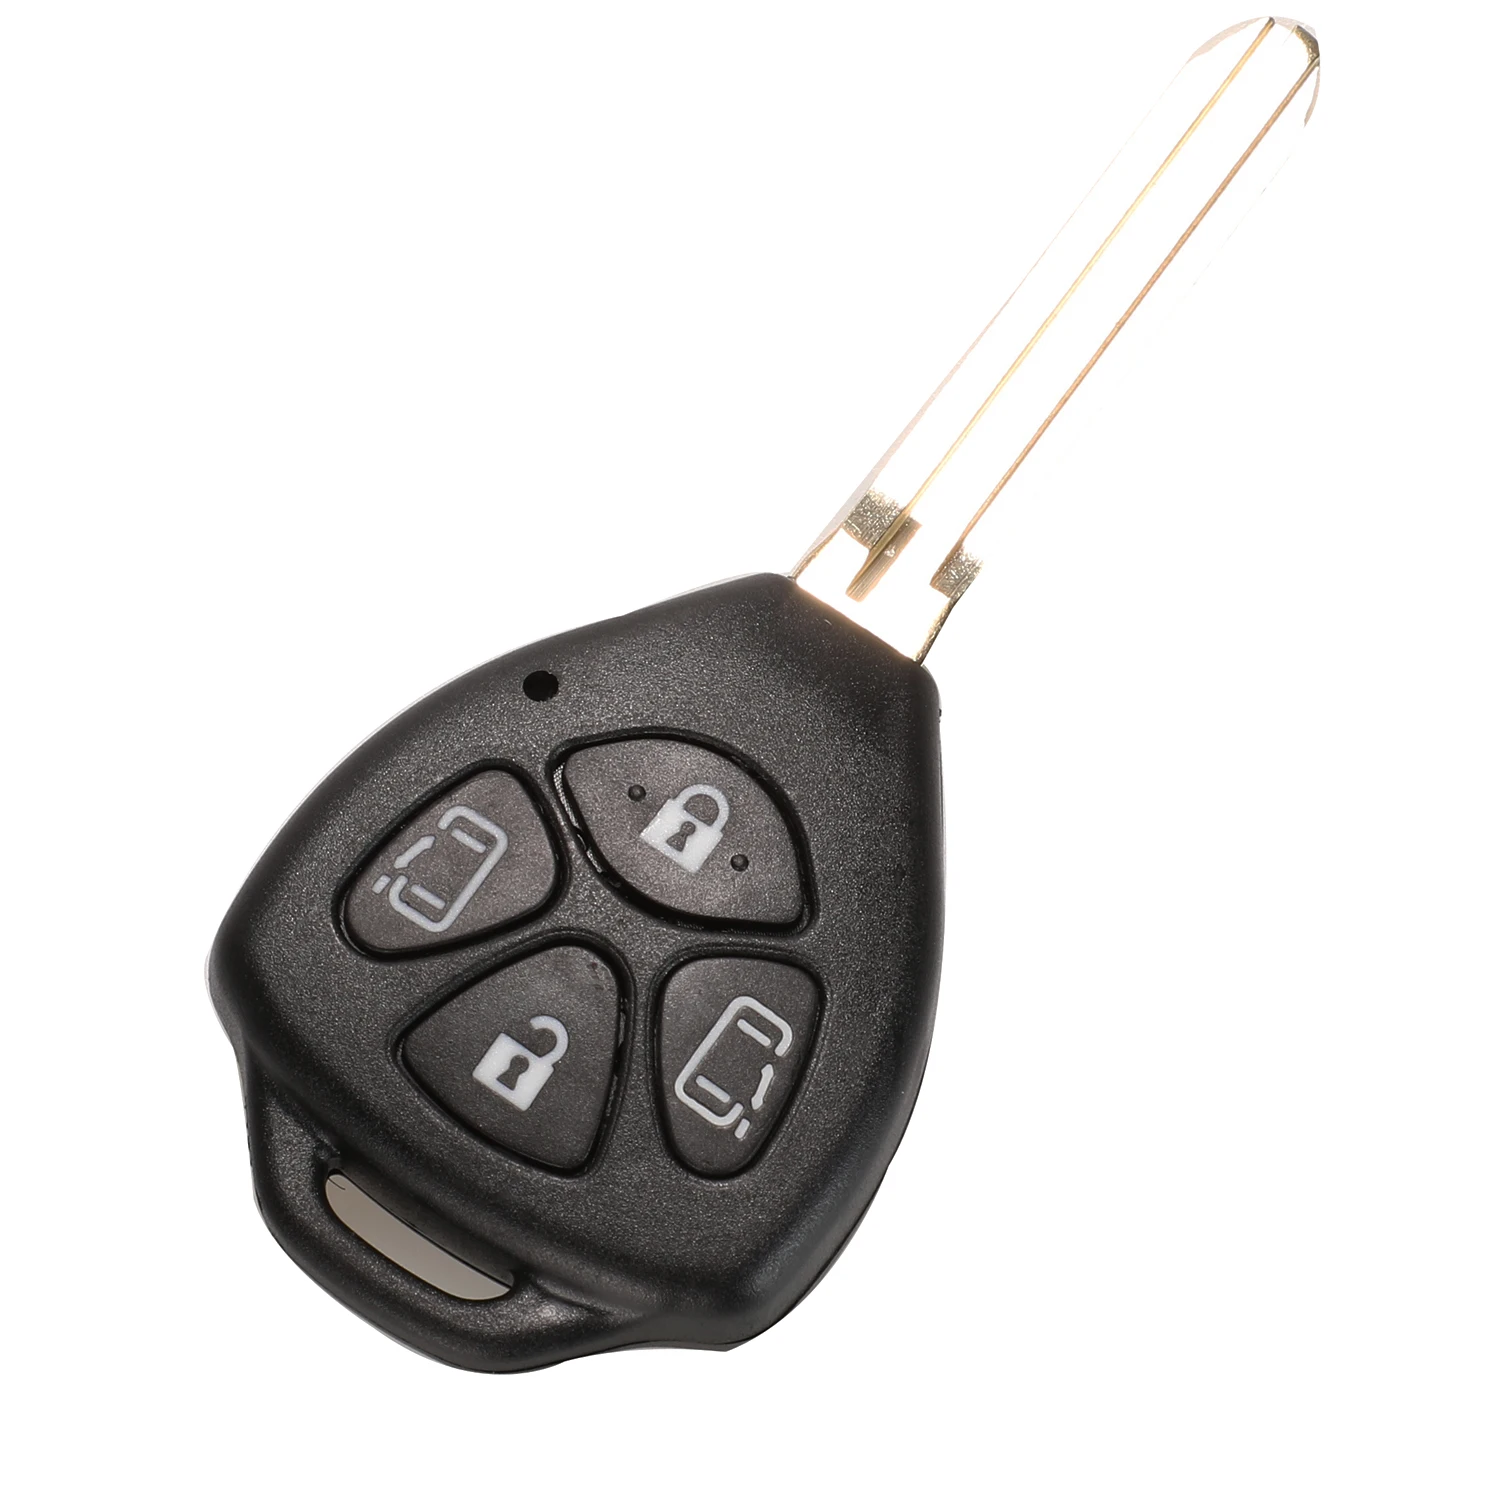 Jingyuqin 10p дистанционный Автомобильный ключ, чехол, крышка, брелок для Toyota Camry, ключ для Toyota Camry, Avalon, Corolla Matrix Rav4 Venza Yaris - Цвет: 4b toy43